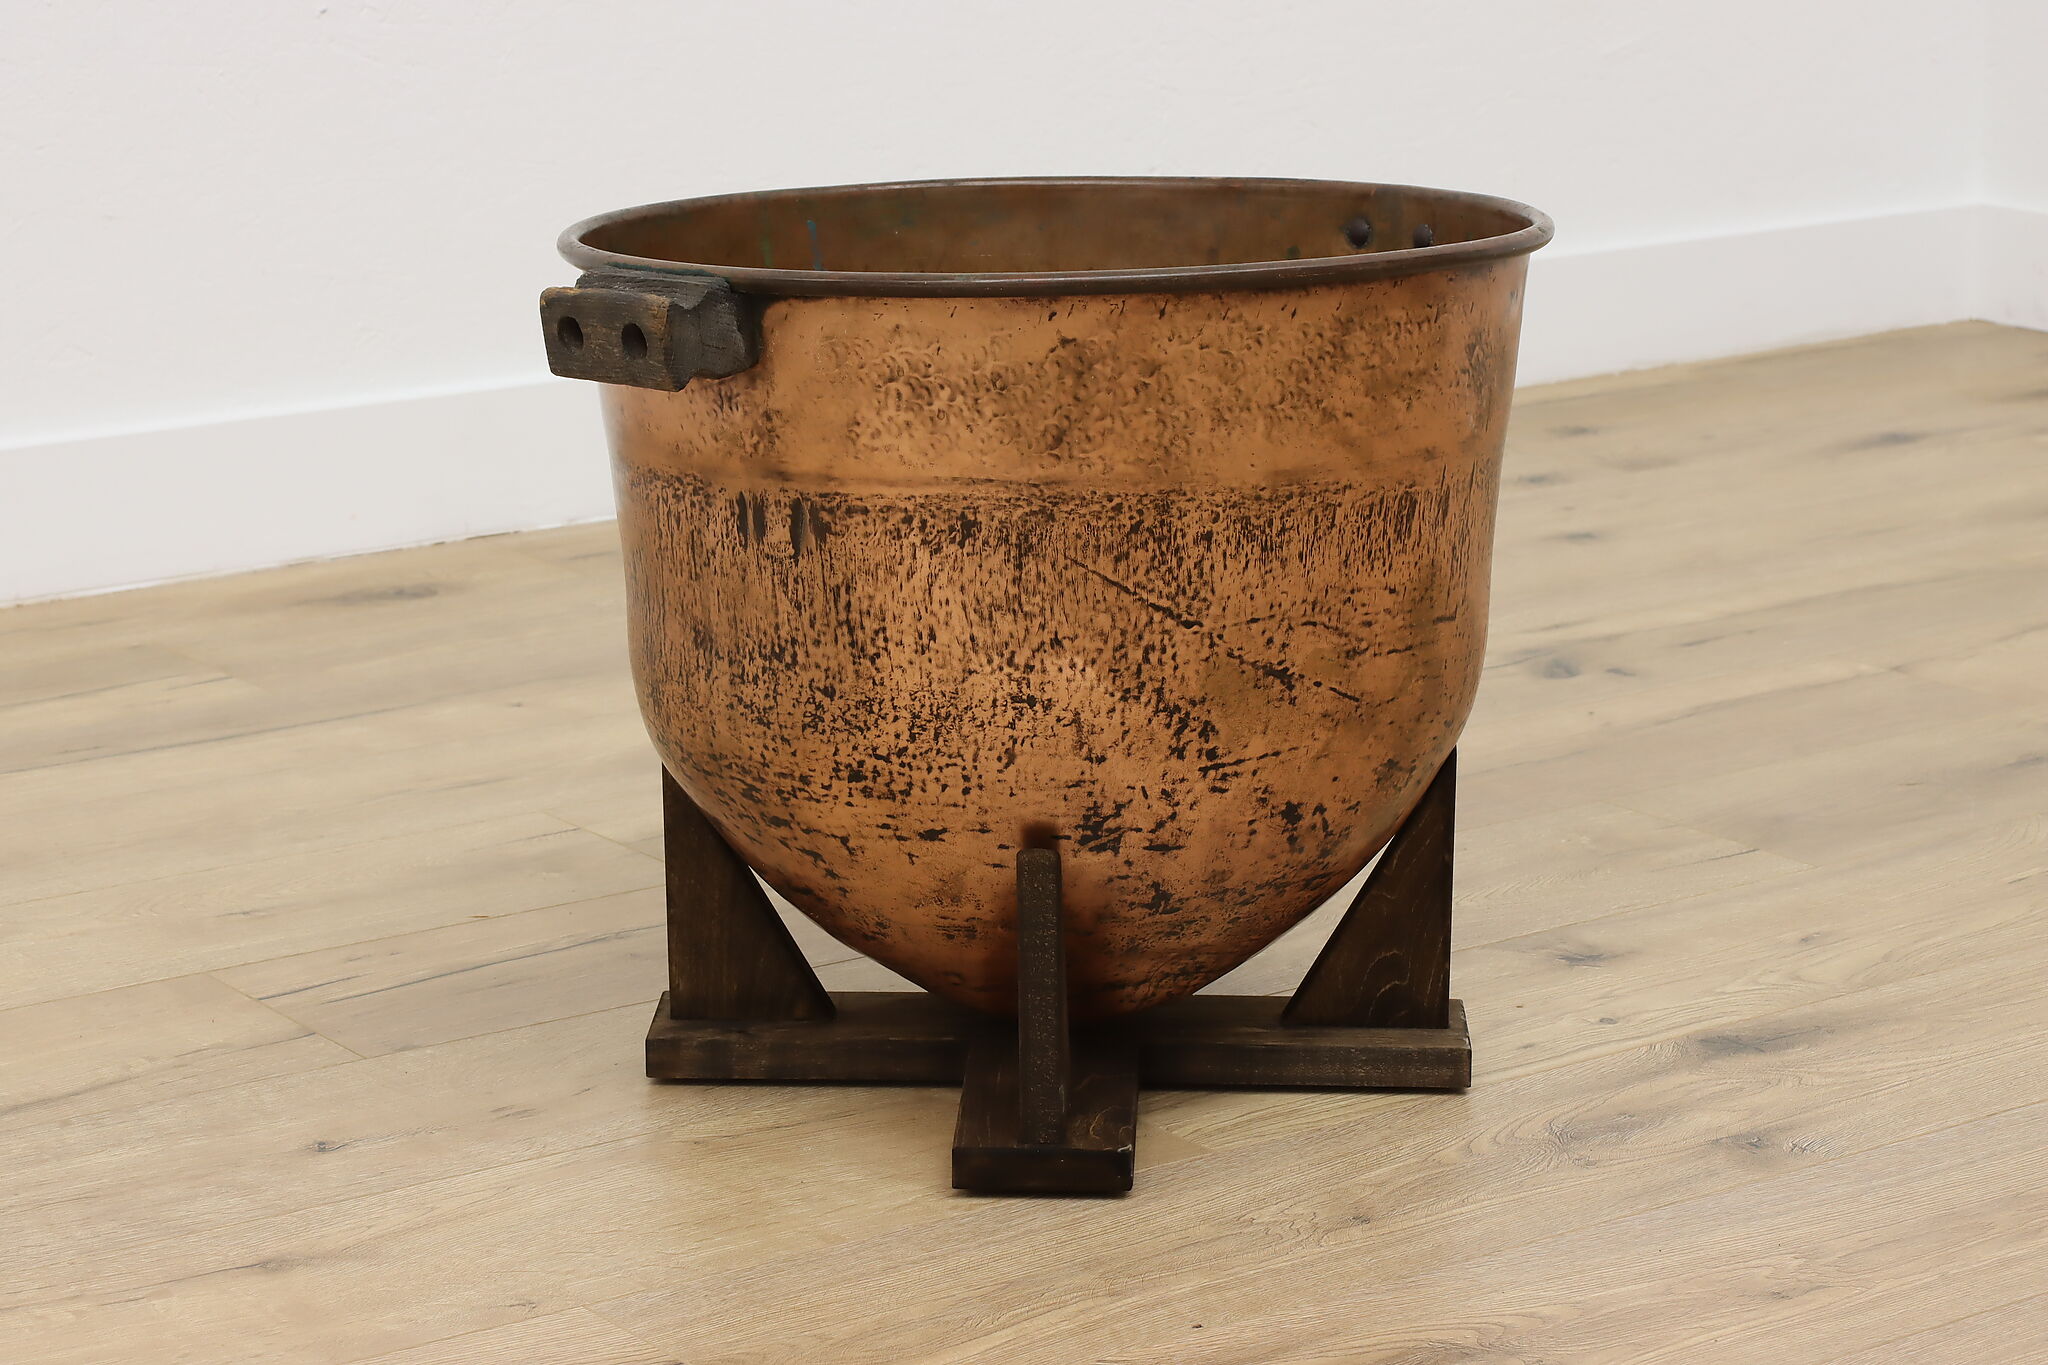 Antique Copper Candy Kettle Cauldron Pot Dovetailed Handled